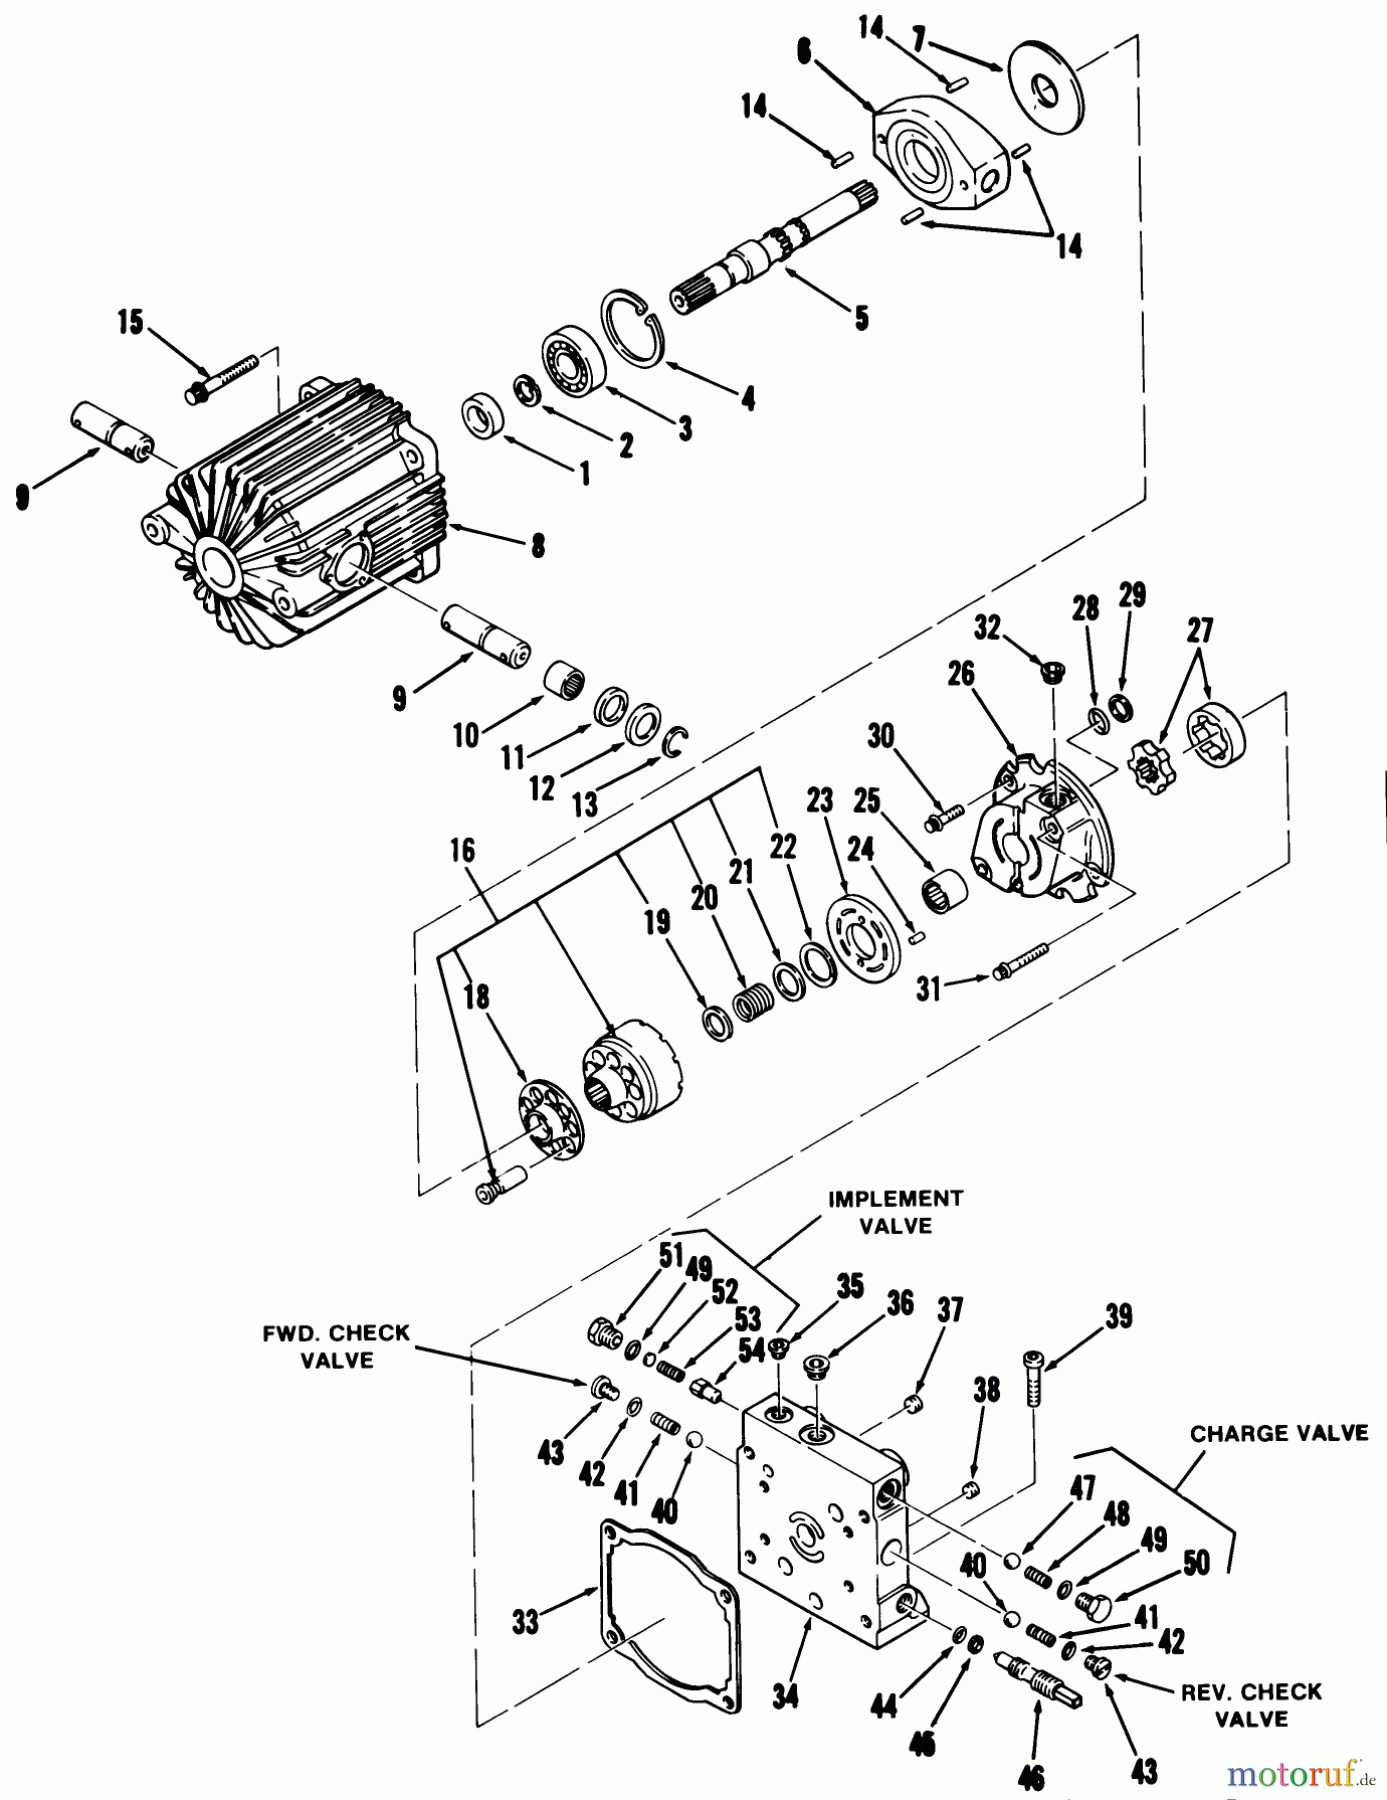  Toro Neu Mowers, Lawn & Garden Tractor Seite 2 91-20KS01 (D-200) - Toro D-200 Automatic Tractor, 1979 HYDROSTATIC TRANSMISSION-PUMP SECTION